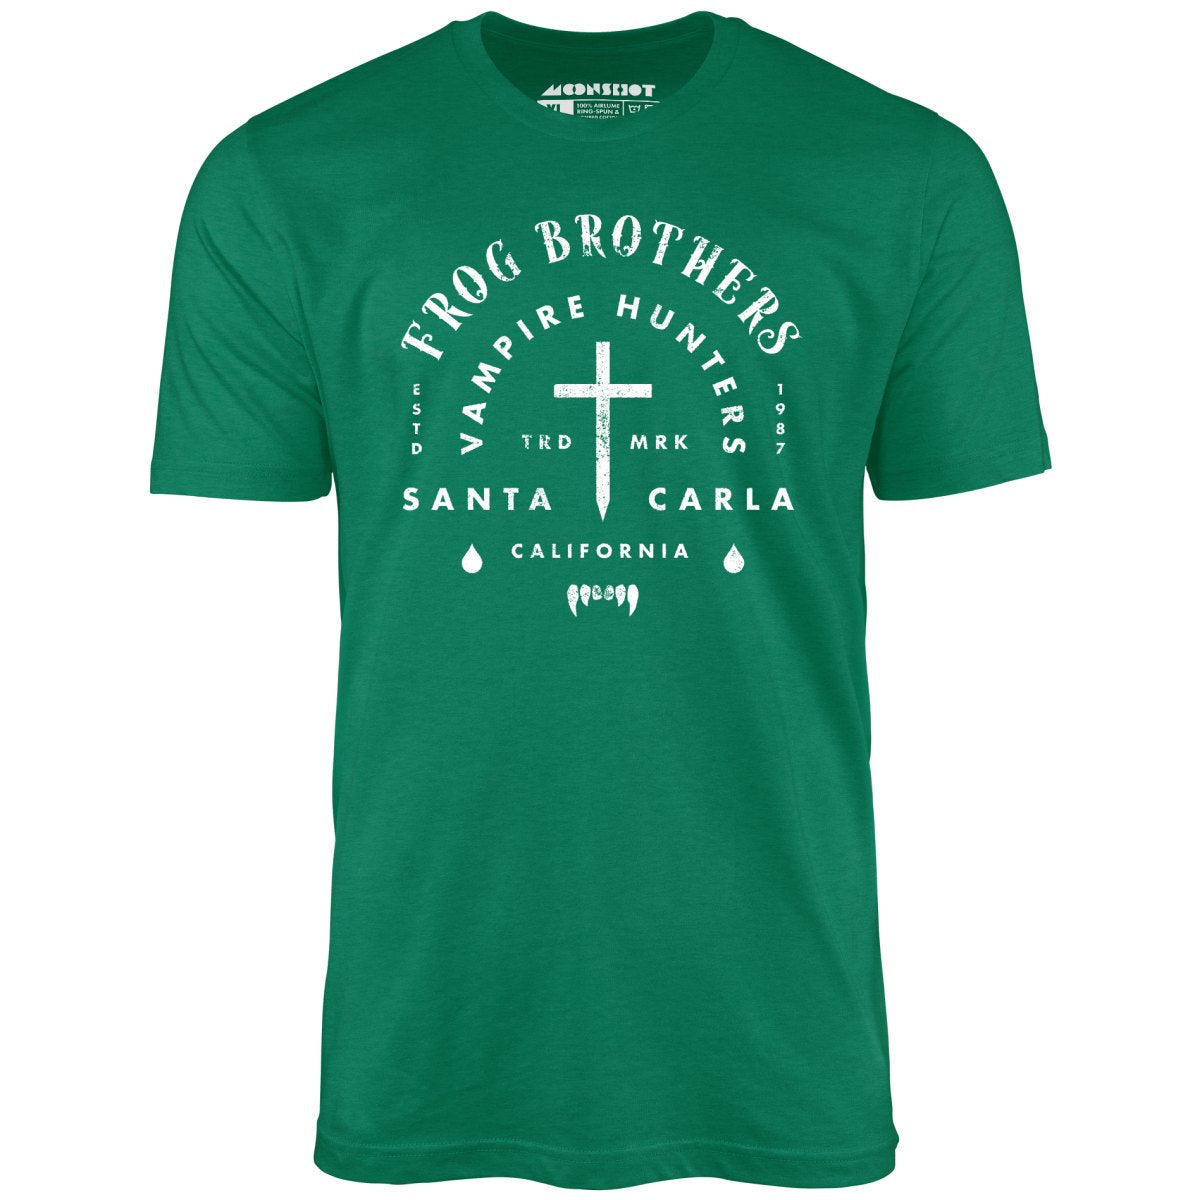 Frog Brothers Vampire Hunters - Unisex T-Shirt